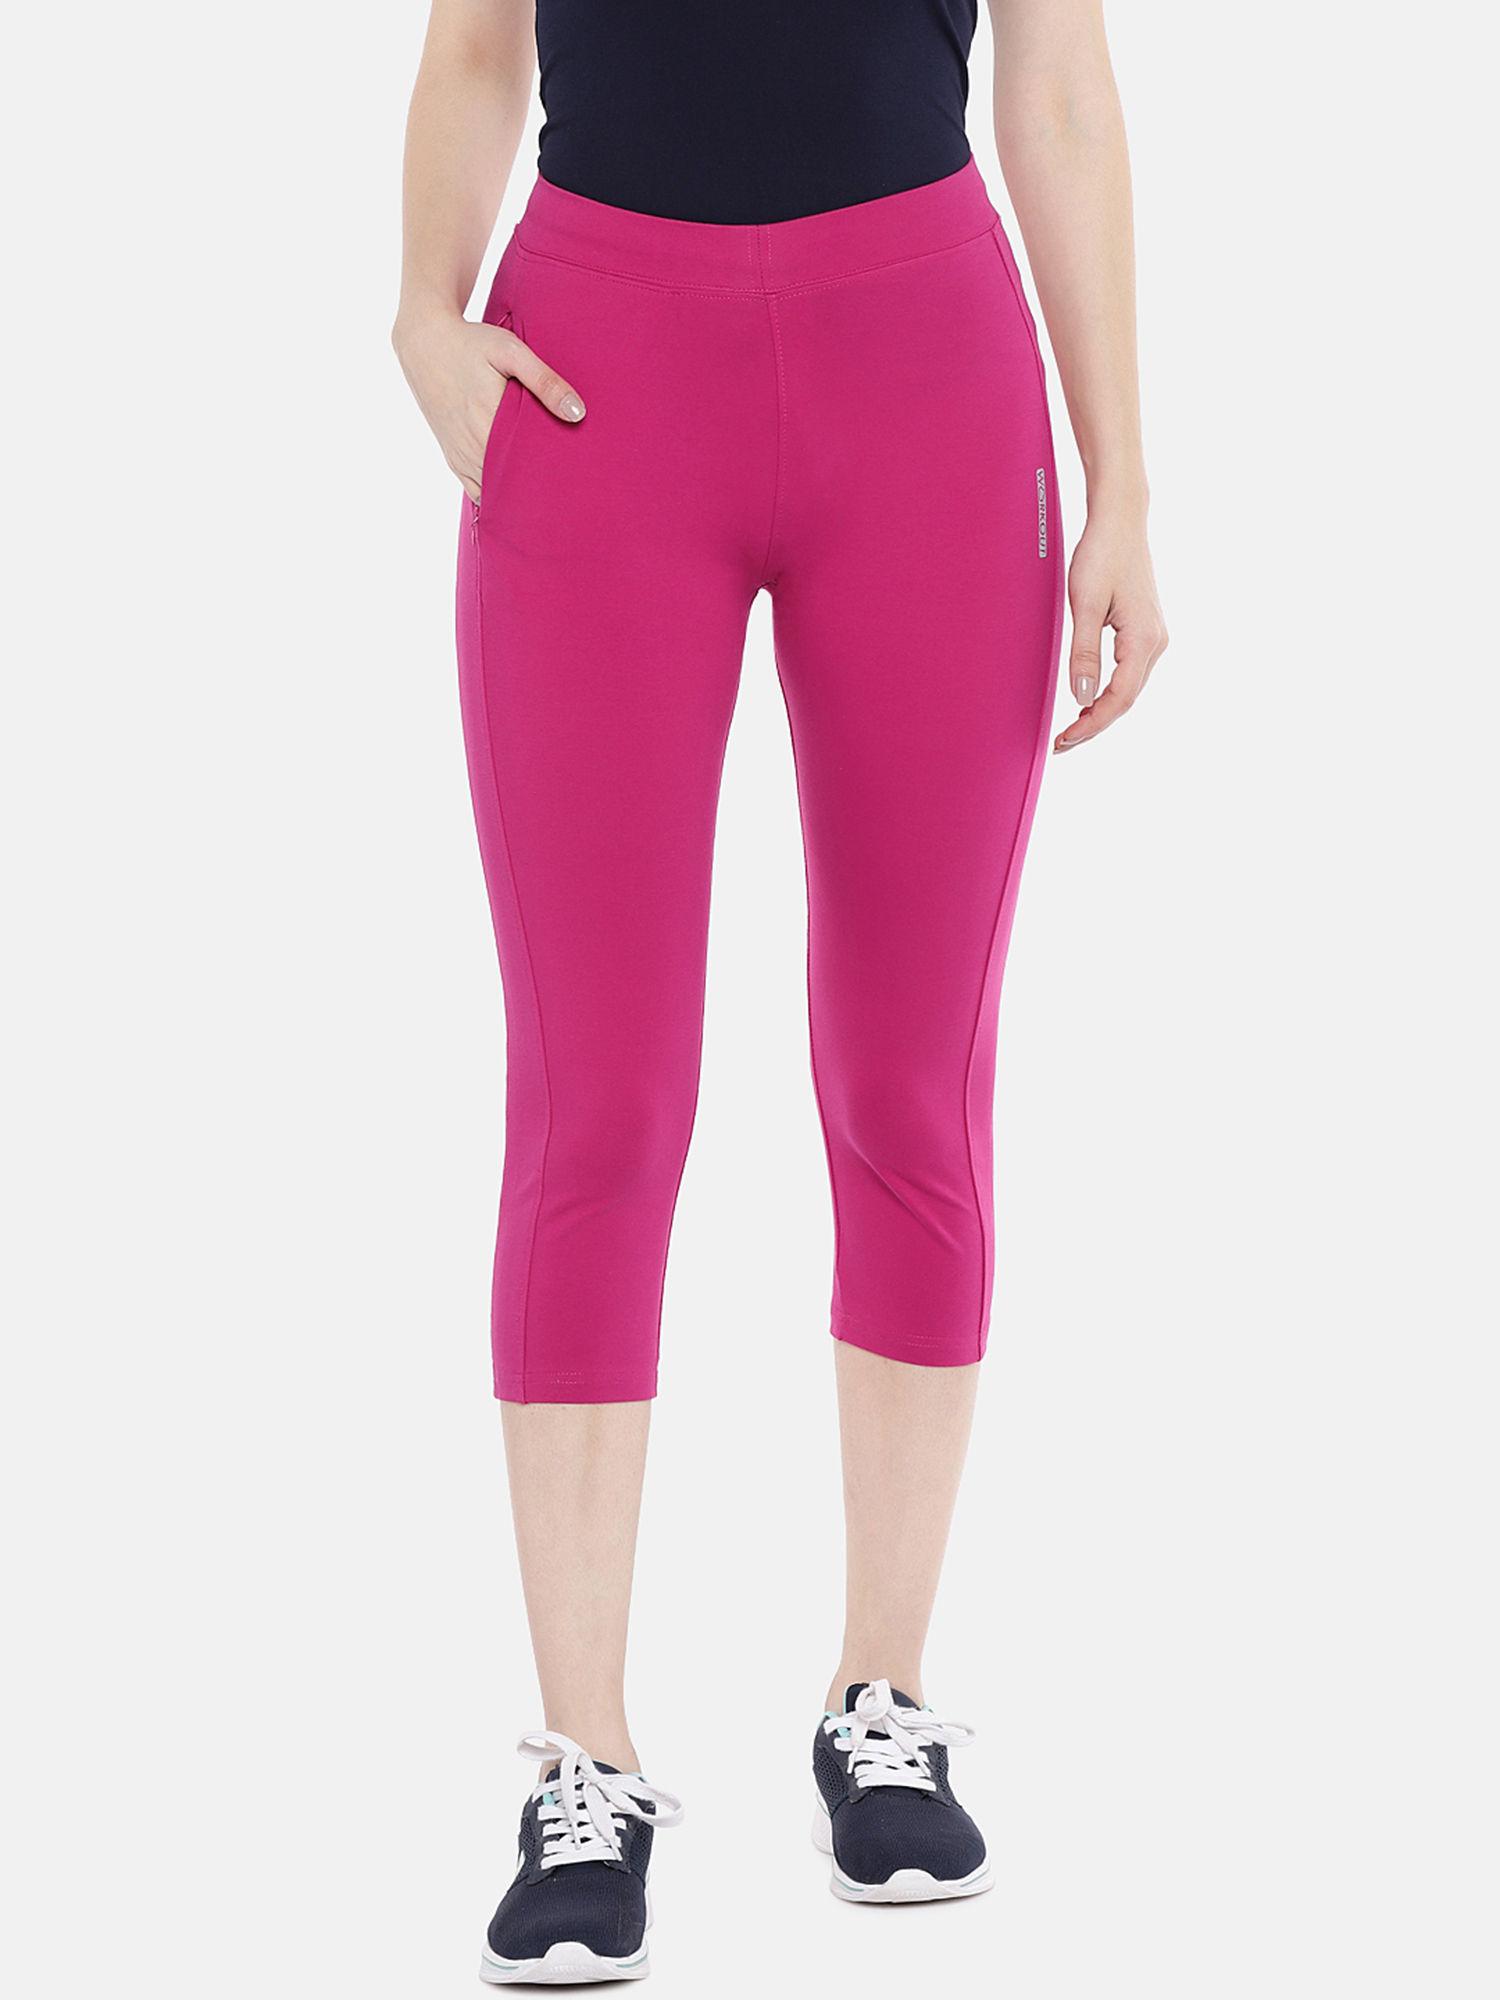 cotton spandex women's workout capri with zipper pocket - pink